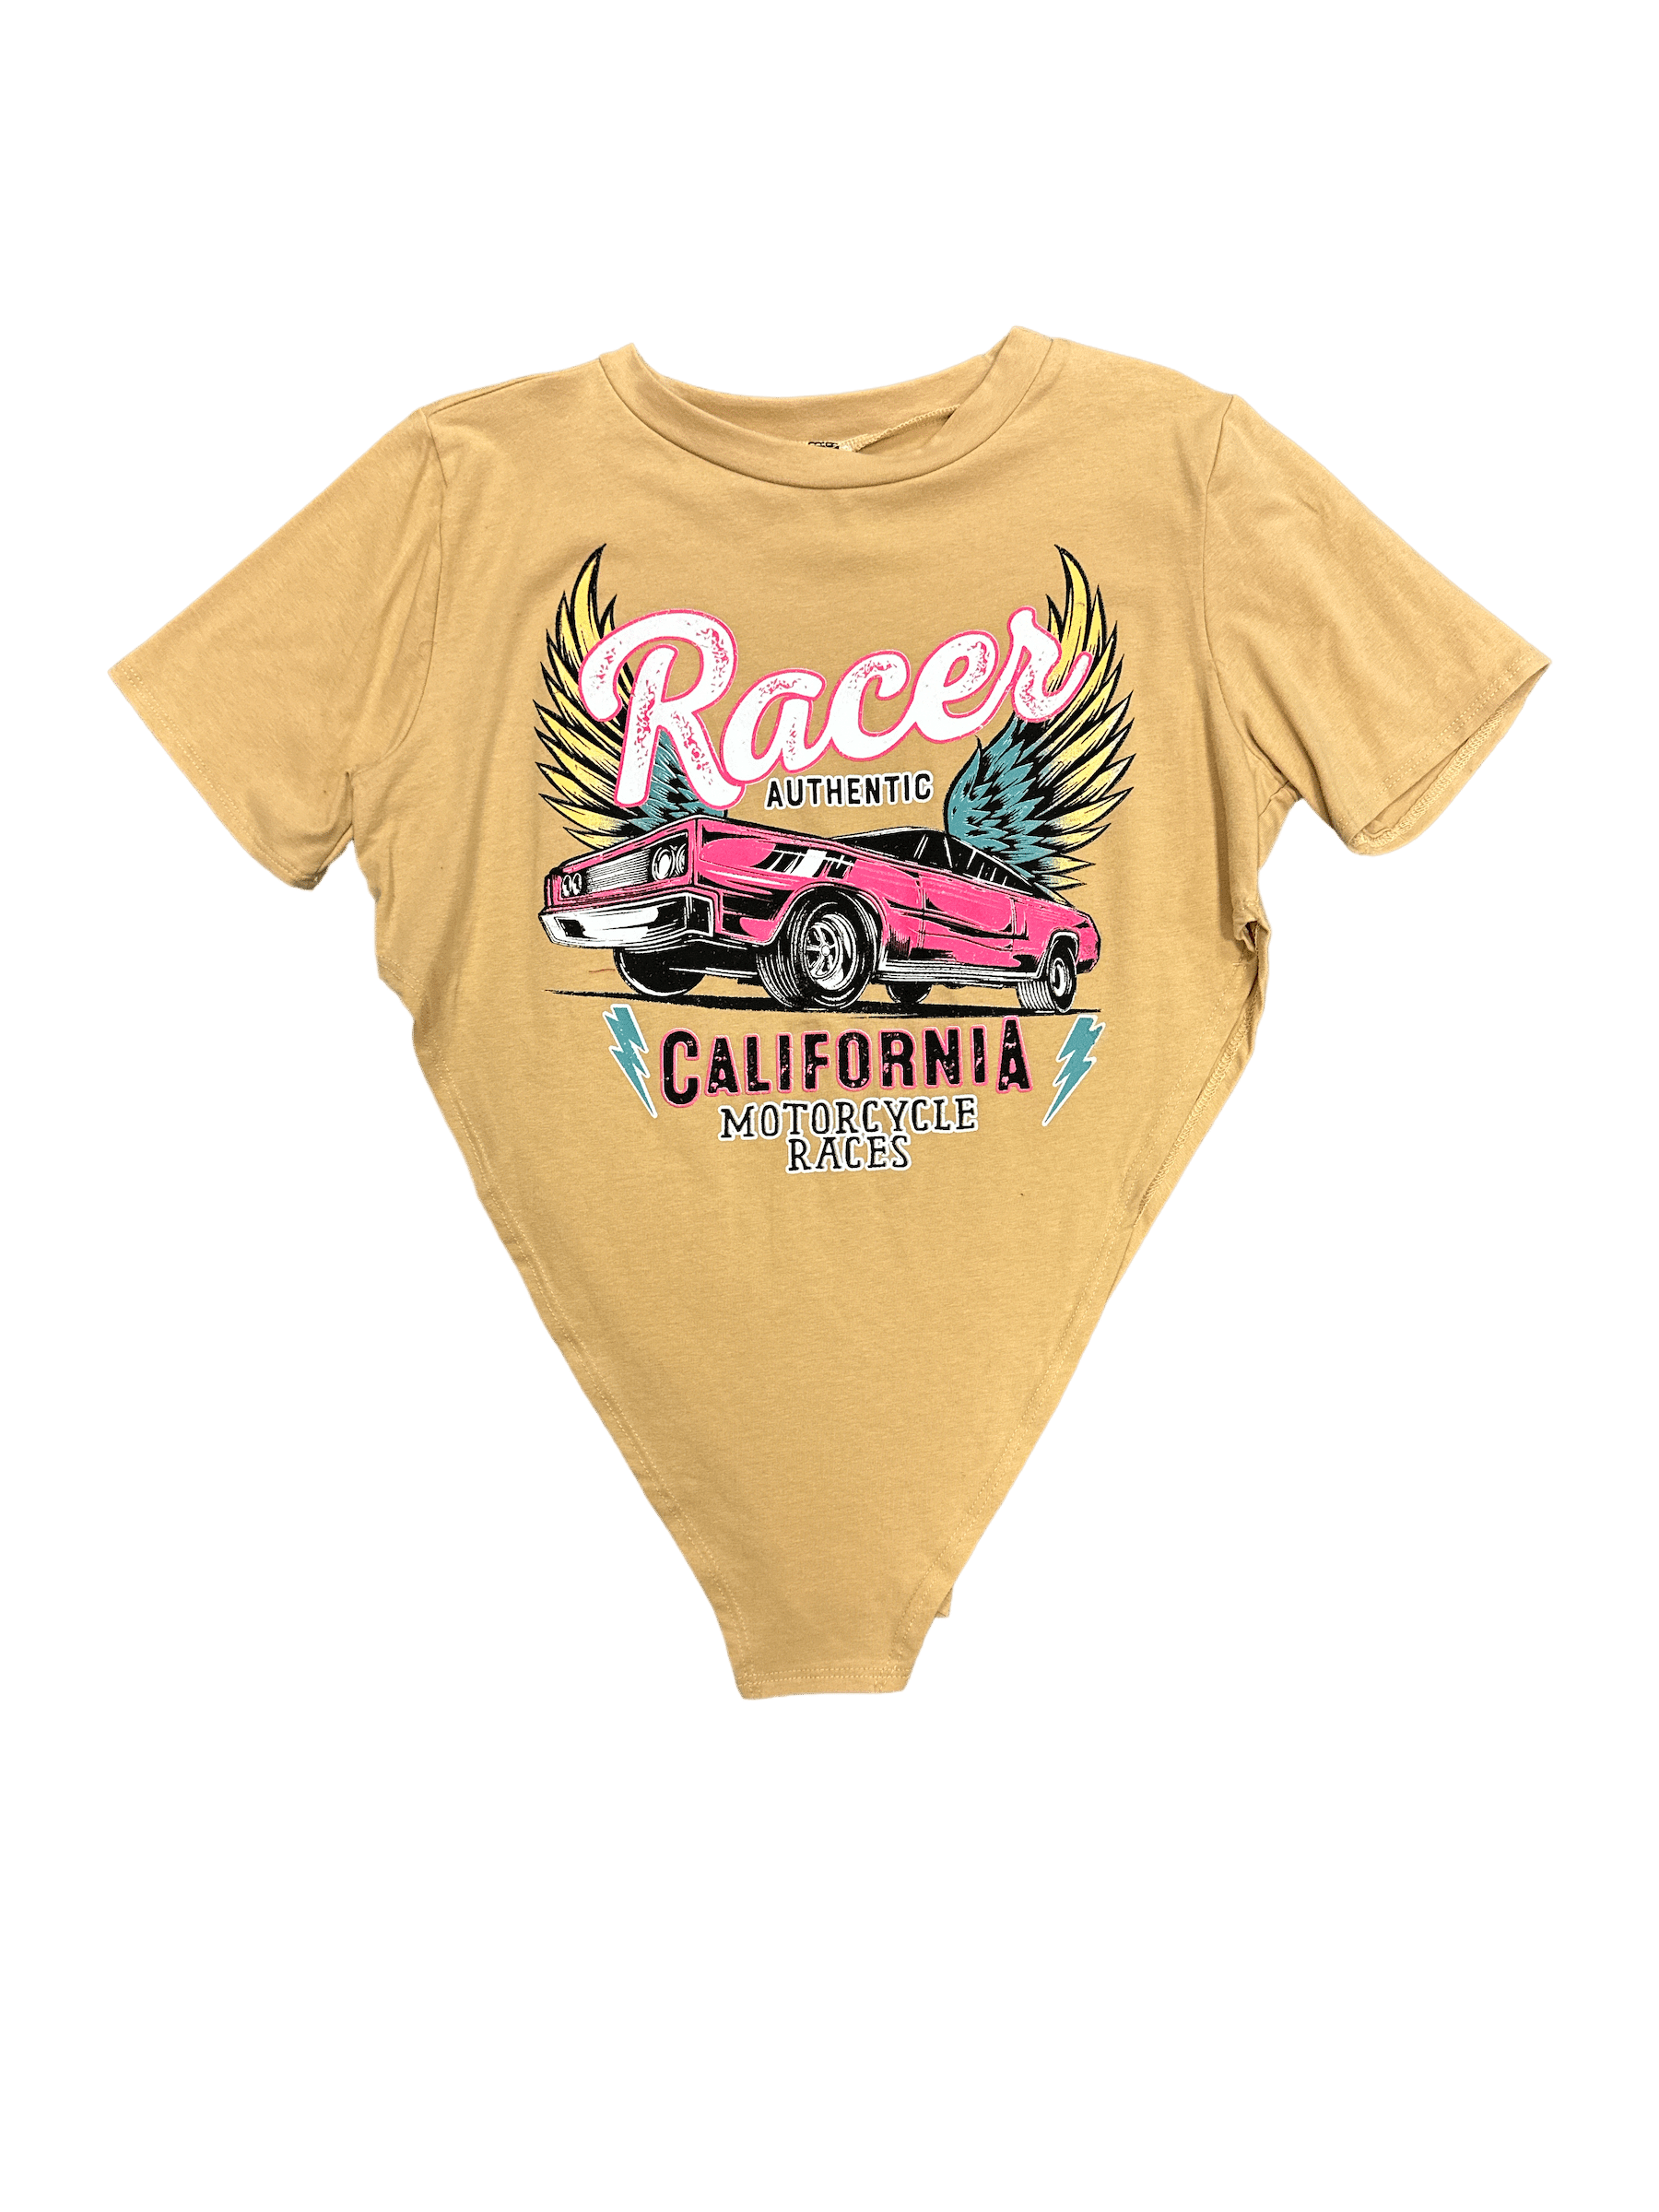 JNk T SHIRT Timber California racer shirt